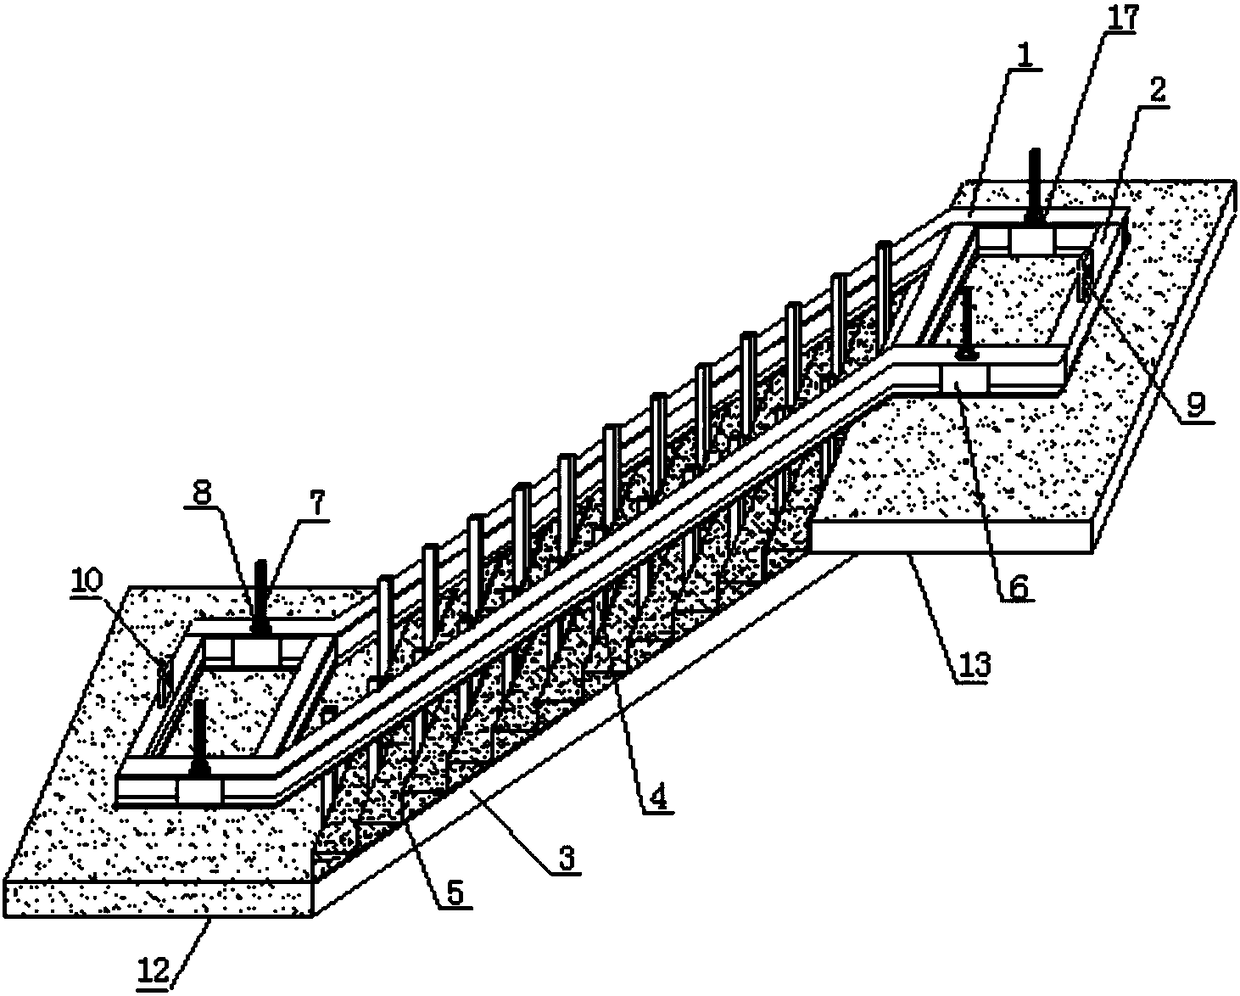 Stair steel framework for building